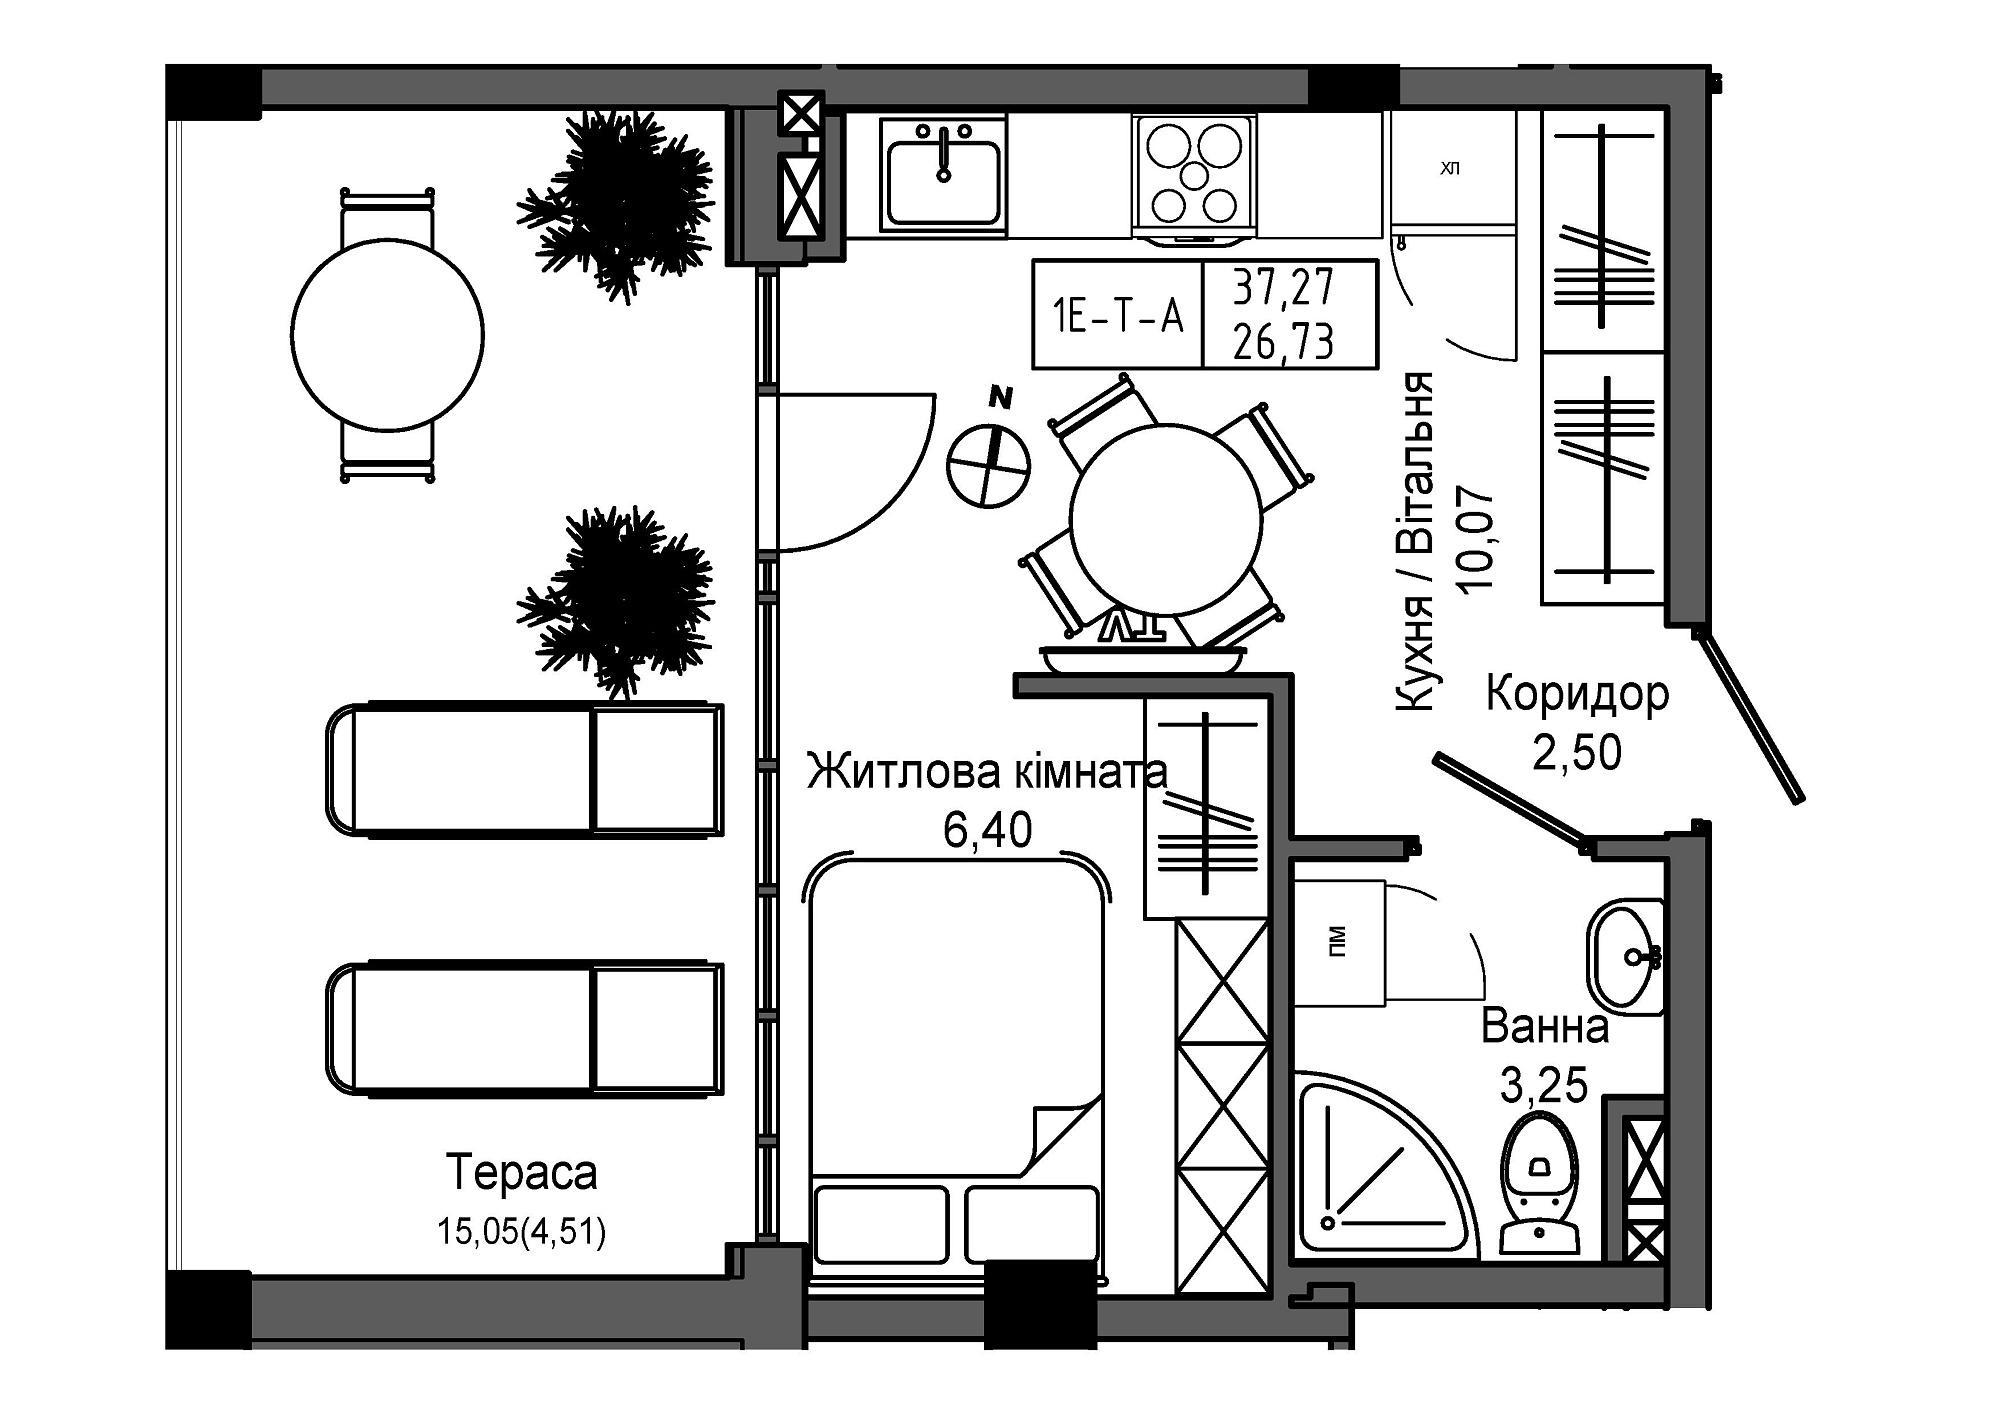 Планування 1-к квартира площею 26.73м2, UM-006-08/0017.